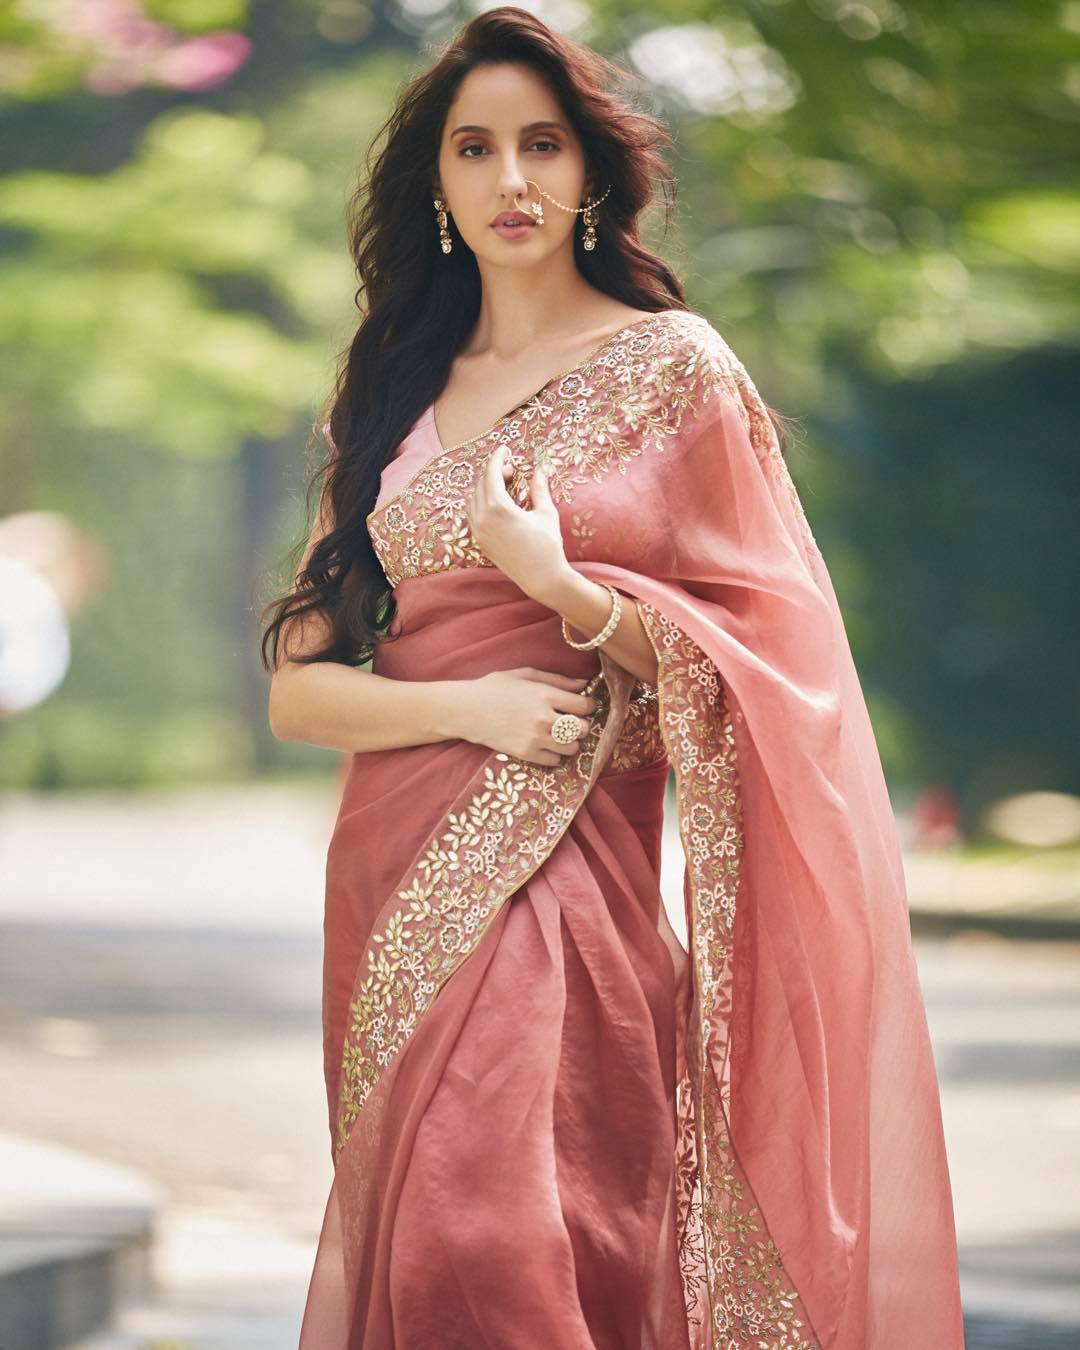 18+ Bollywood Actress Nora Fatehi Fuck Video 2021 Hindi Short Film Watch 720p HDRip Download